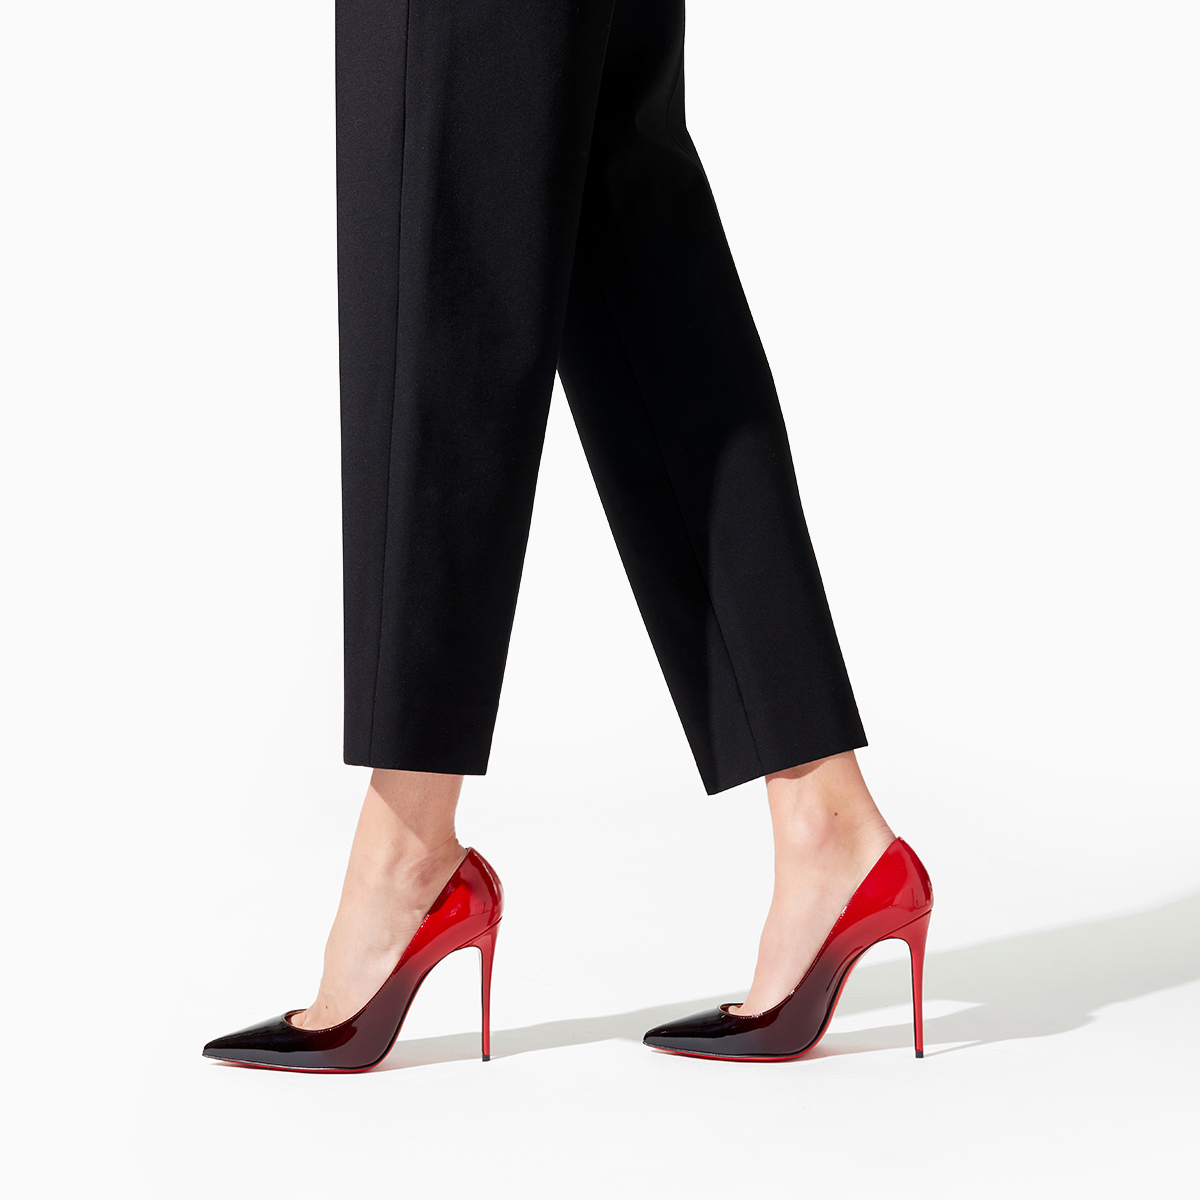 Women's High Heel Red Bottom Shoes Size 6 M Christian Louboutin Black  160 Mesh